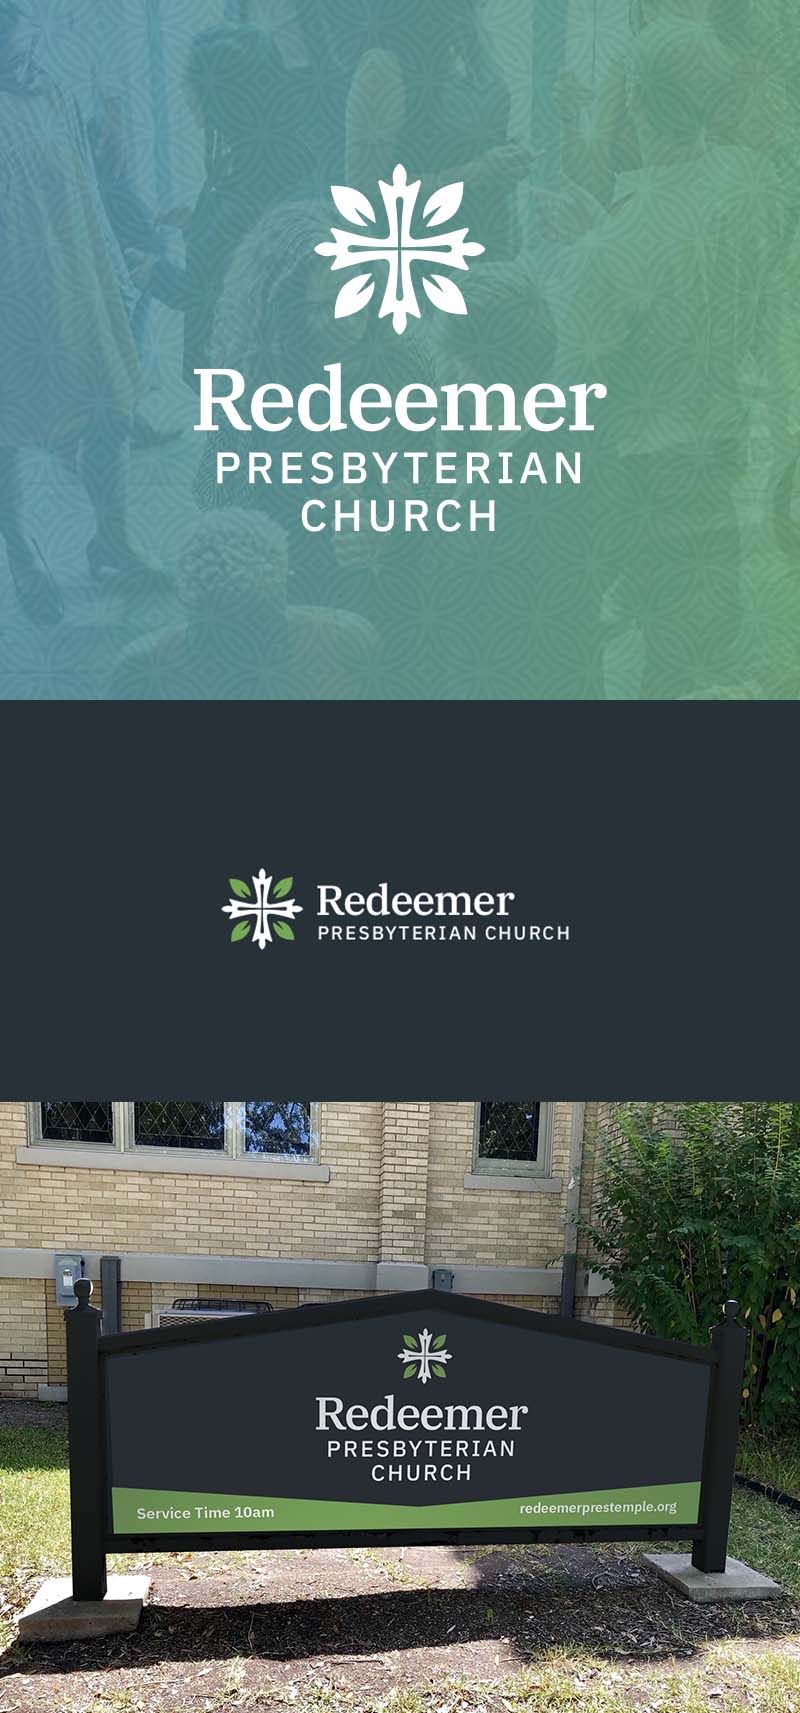 Logo for Redeemer Prysbyterian Church in Temple, Texas